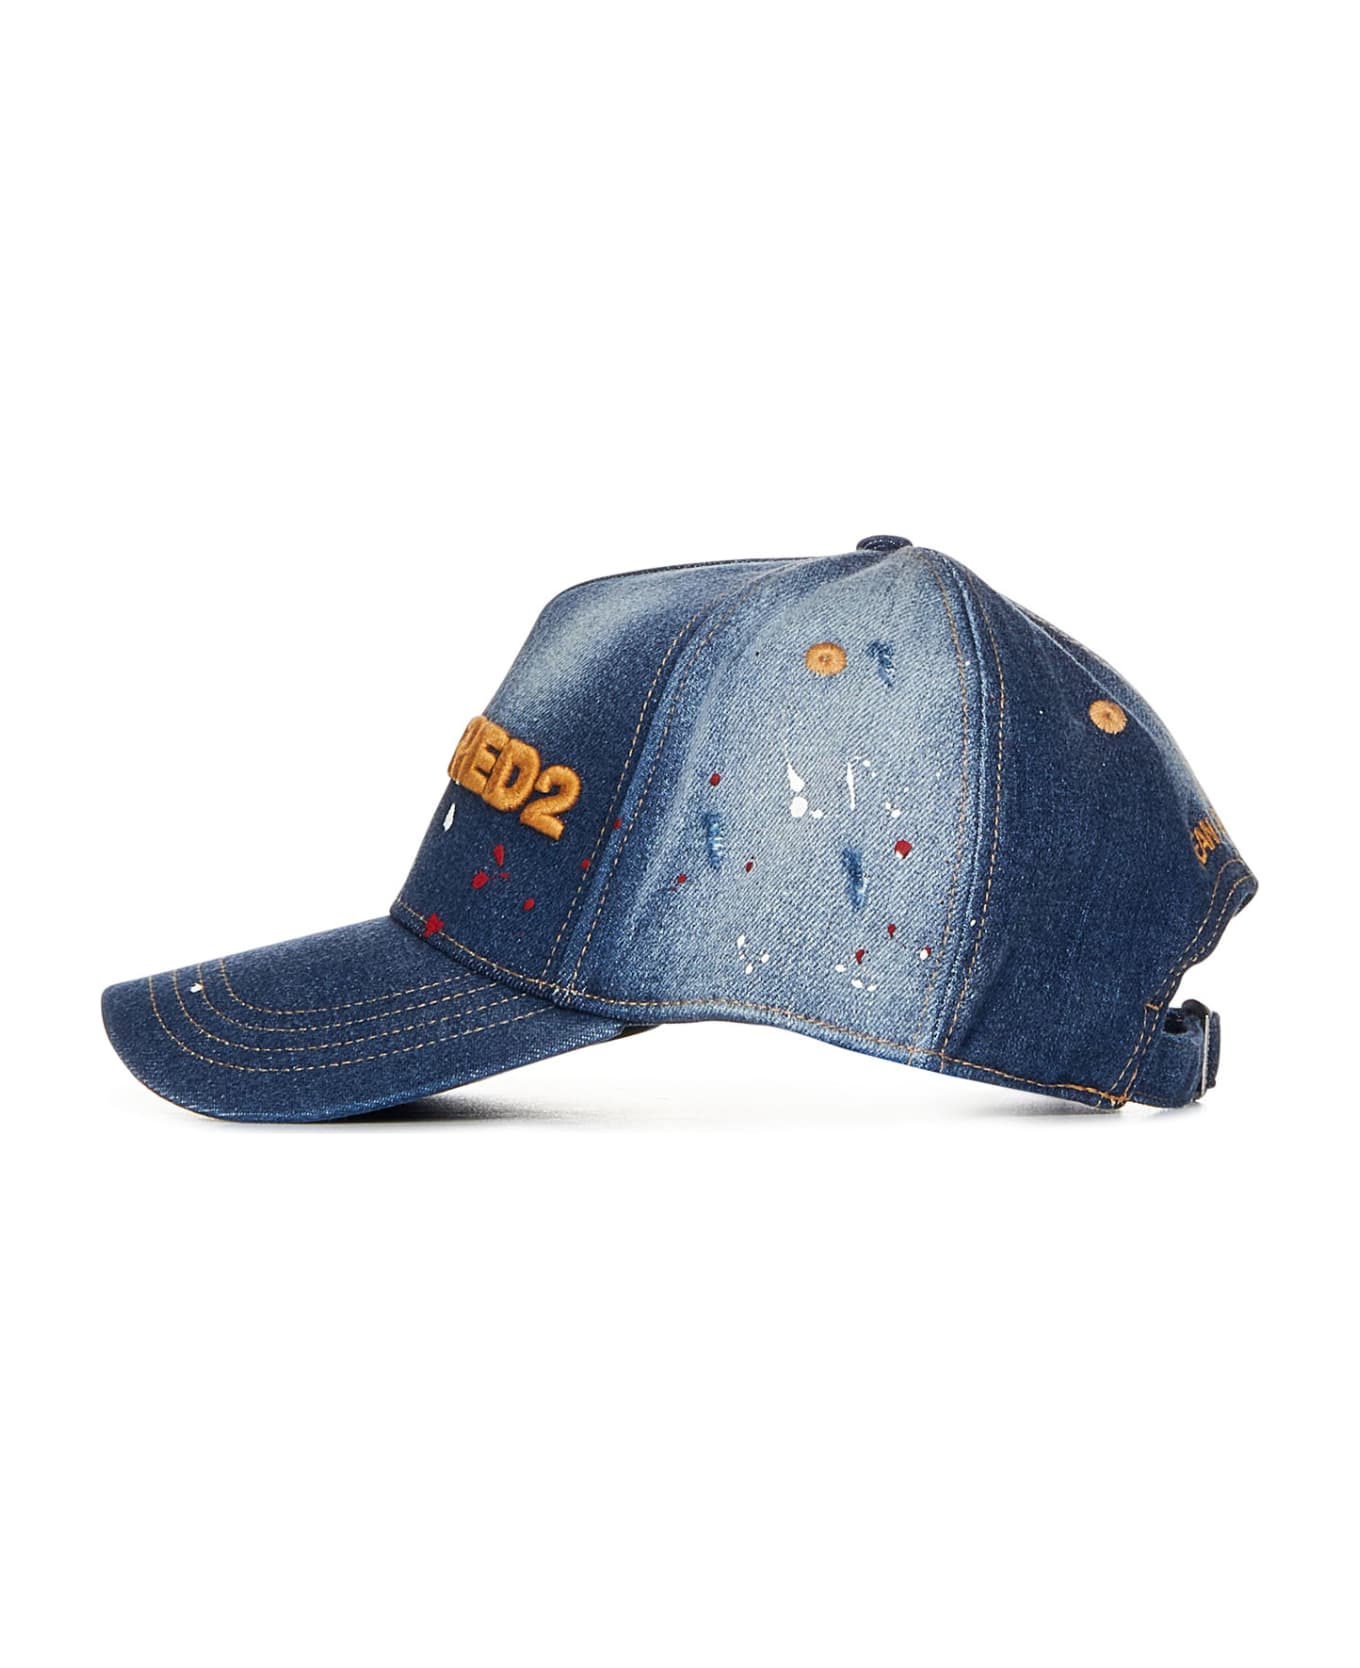 Dsquared2 Hat - Blue 帽子